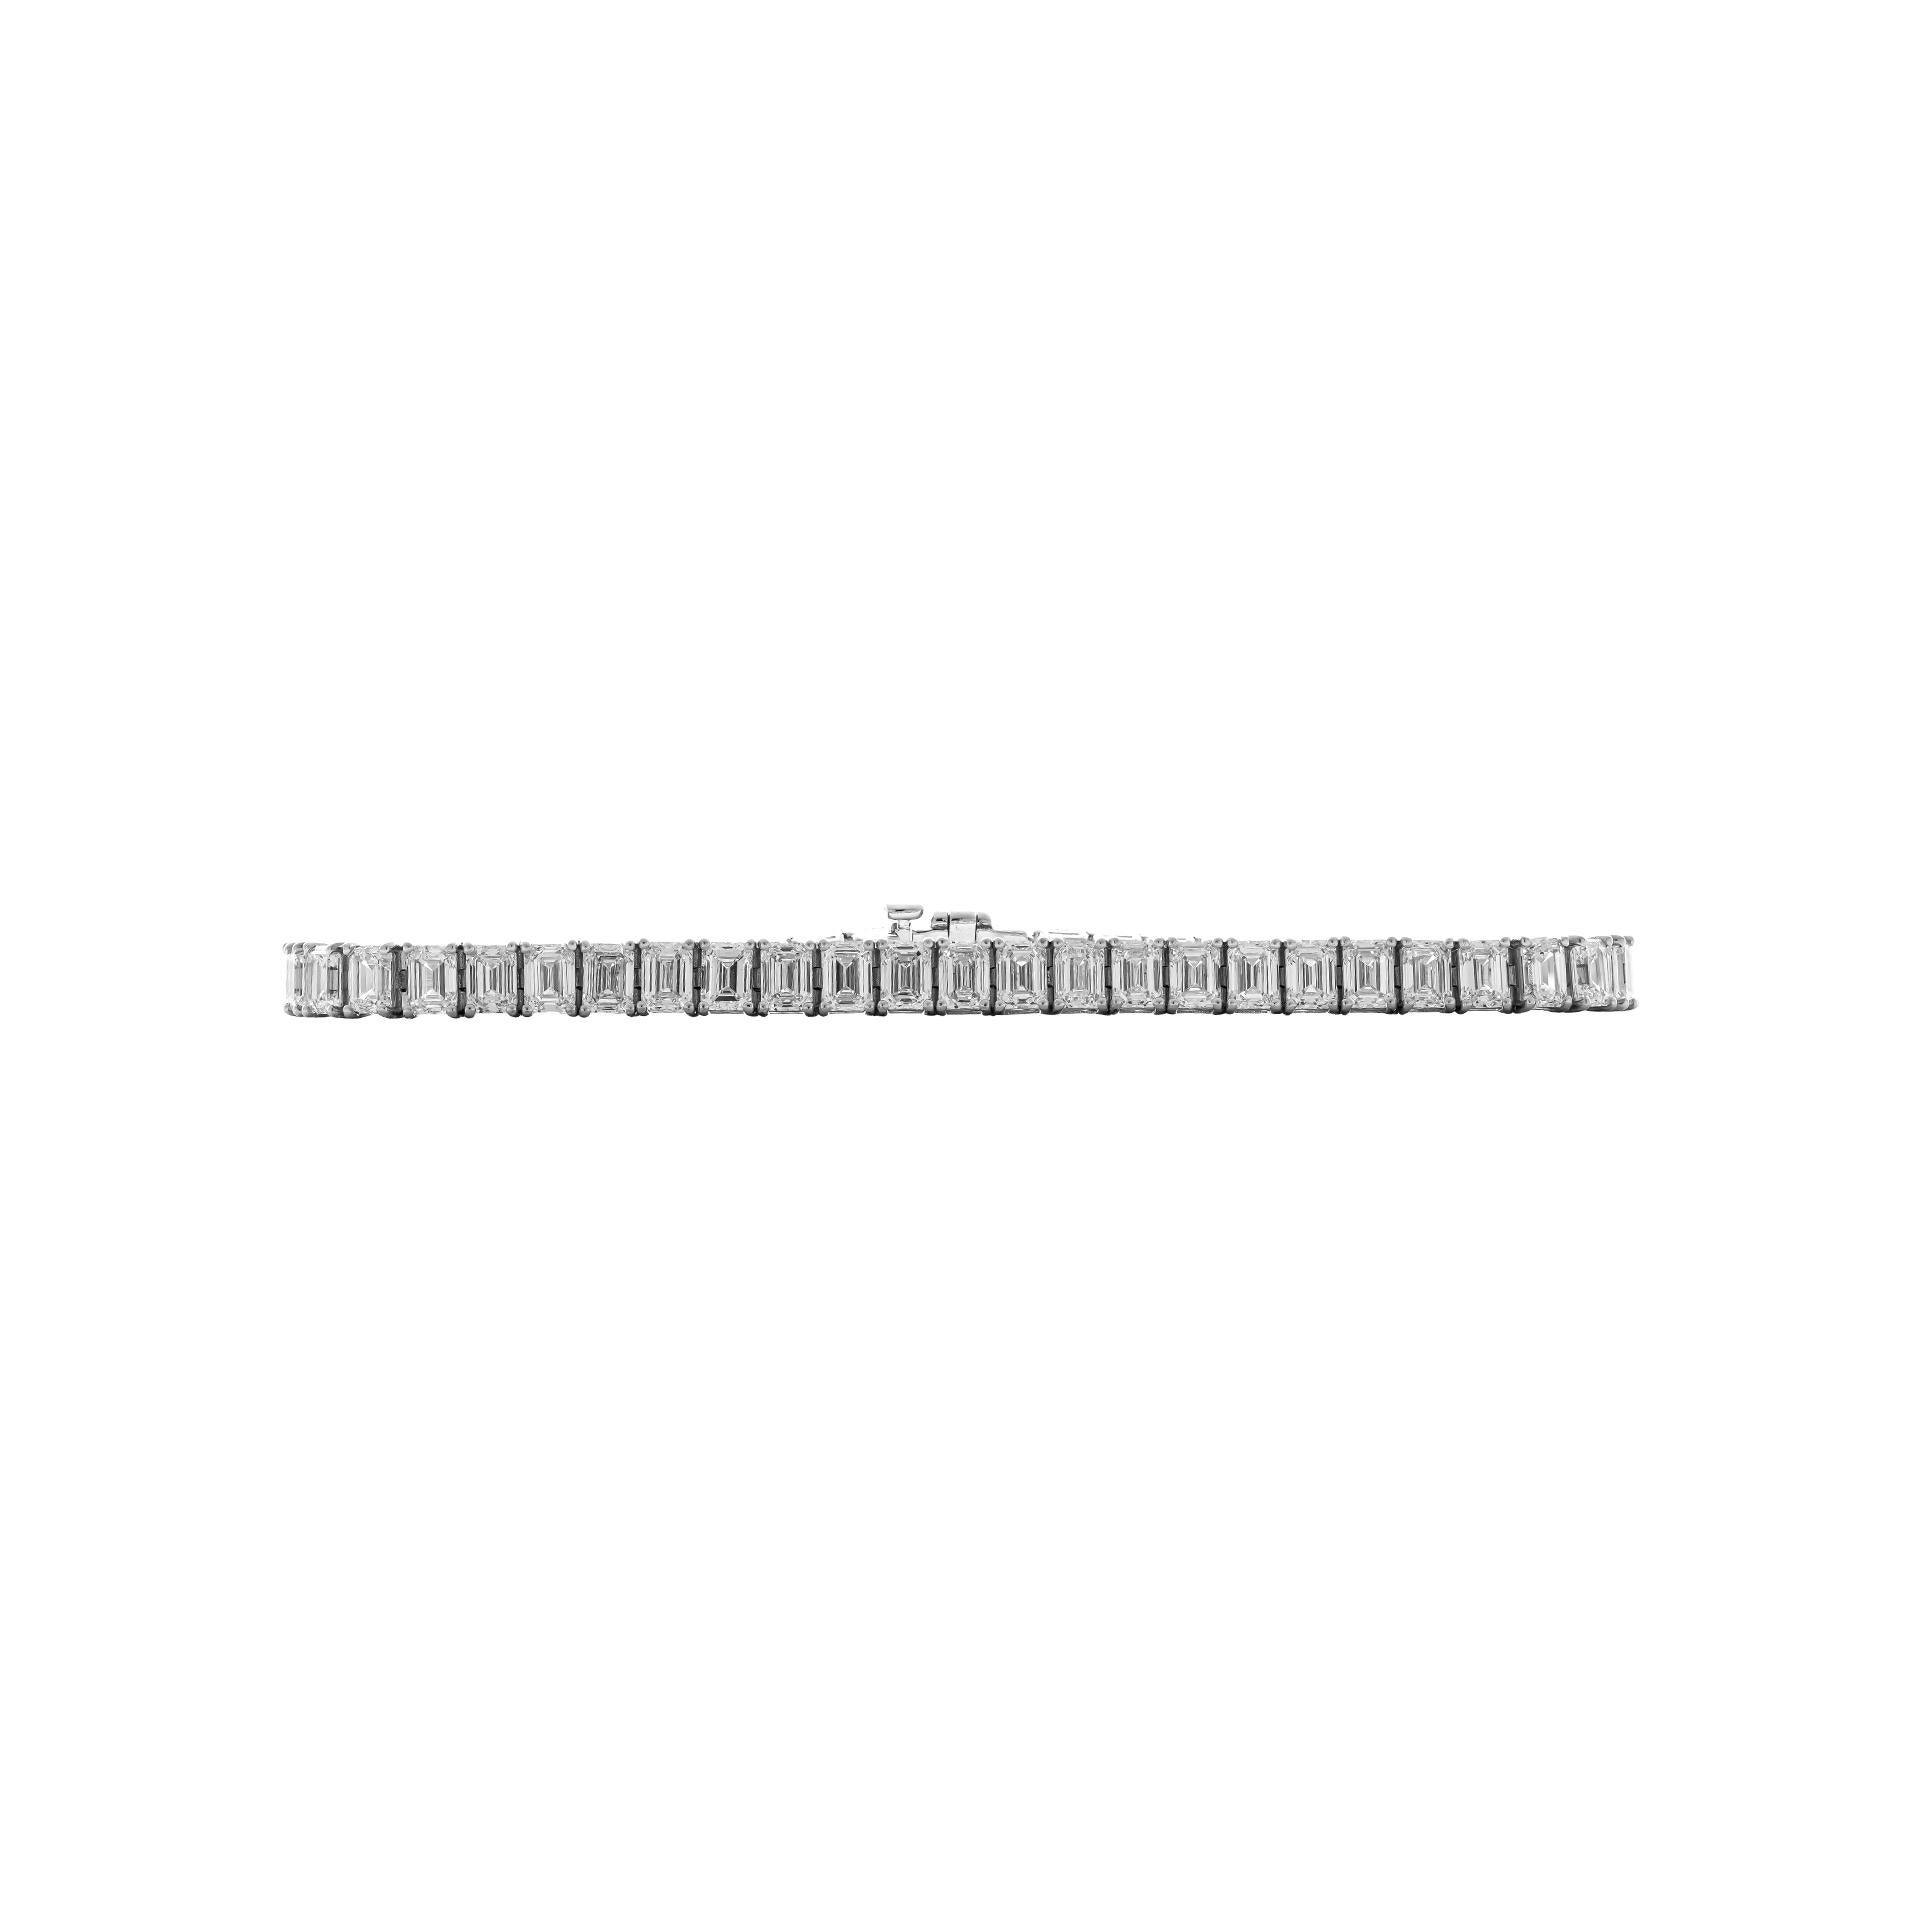 Tennis Bracelet with GIA Certified Emerald cut diamonds in Platinum
50 stones: 0.30ct each
TCW: 15.22ct
7” long 
Each stone: 
0.30 F VS1 GIA#5473103237
0.30 F VS1 GIA#6471091295
0.30 F VS1 GIA#6471279877
0.30 F VS1 GIA#7476055880
0.30 F VS1